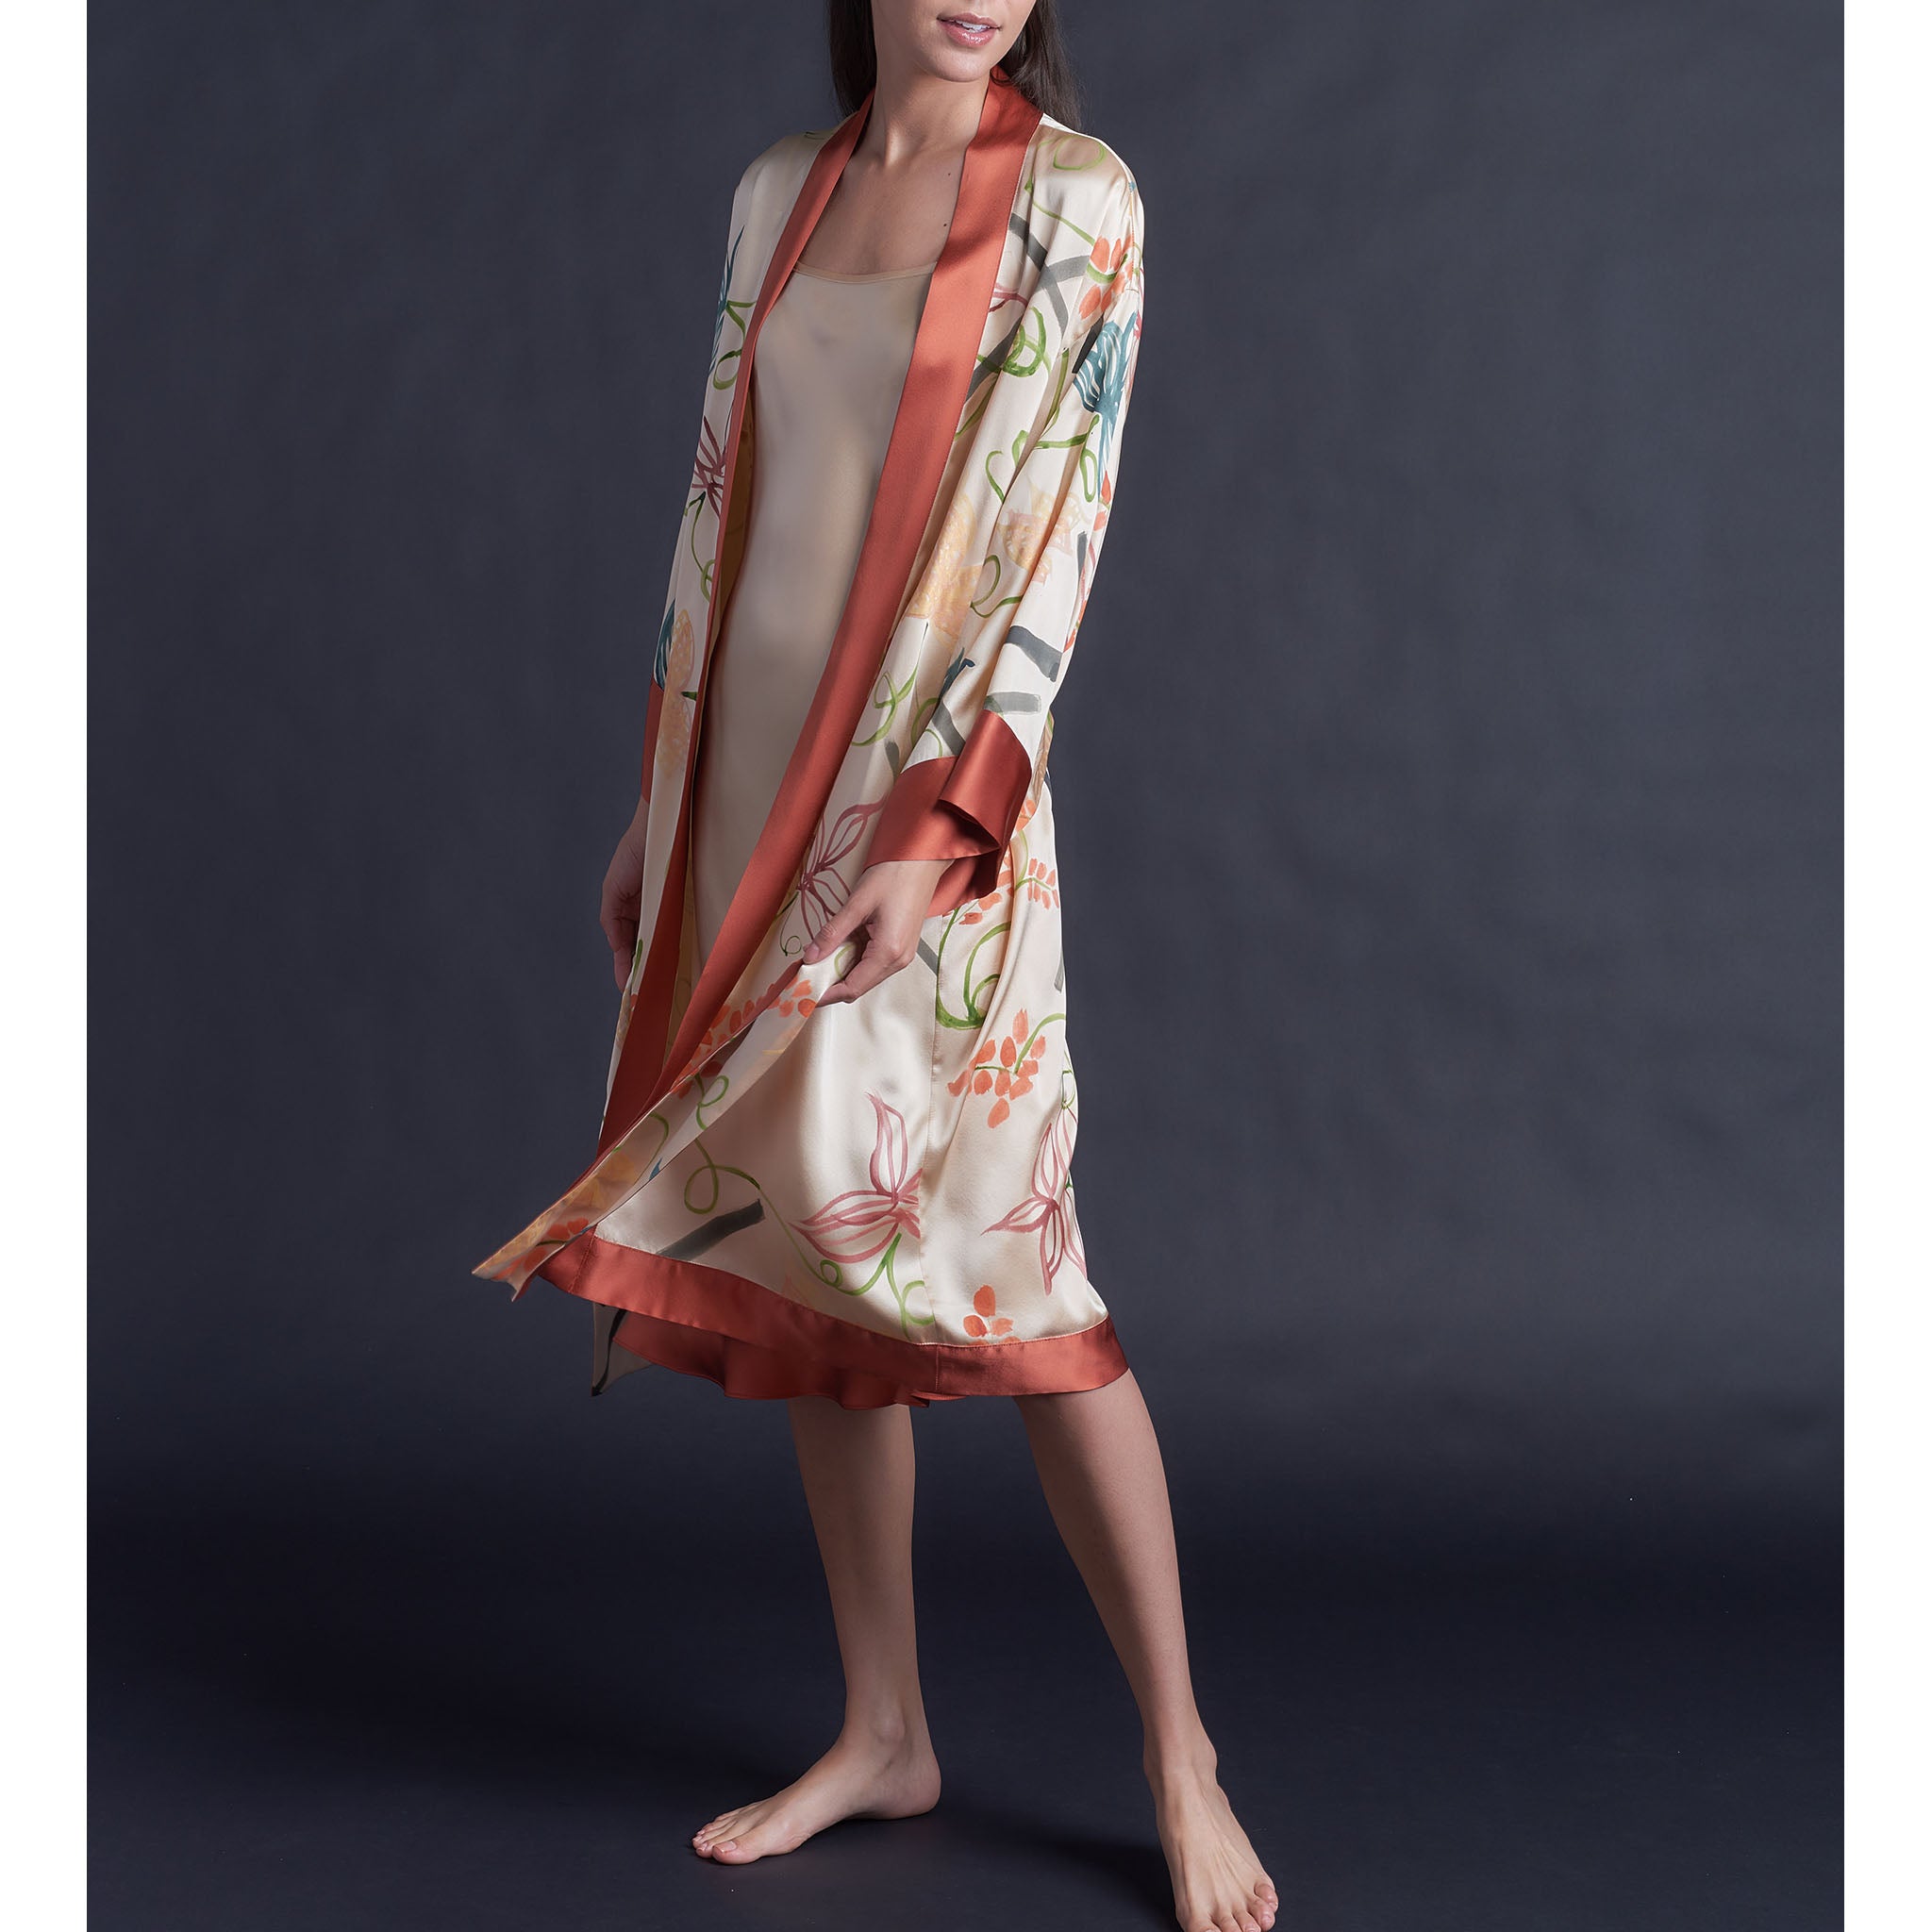 Selene Knee Length Robe in One of Kind Hand Painted Silk Charmeuse